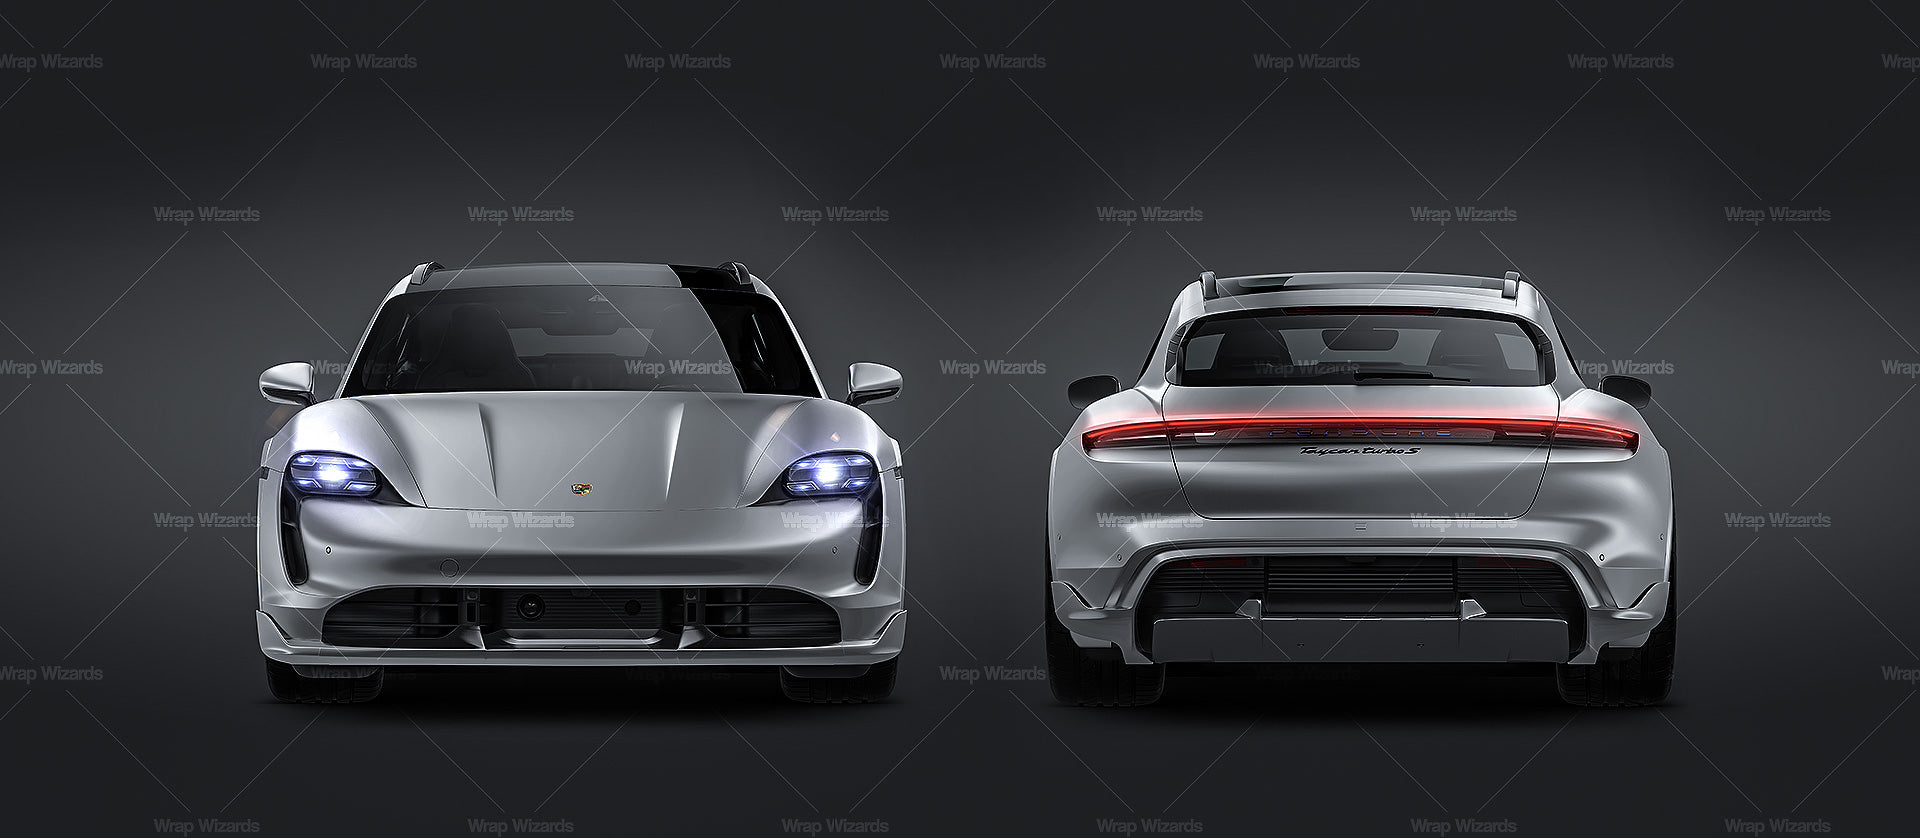 Porsche Taycan Turbo S Cross Turismo 2021 - Car Mockup